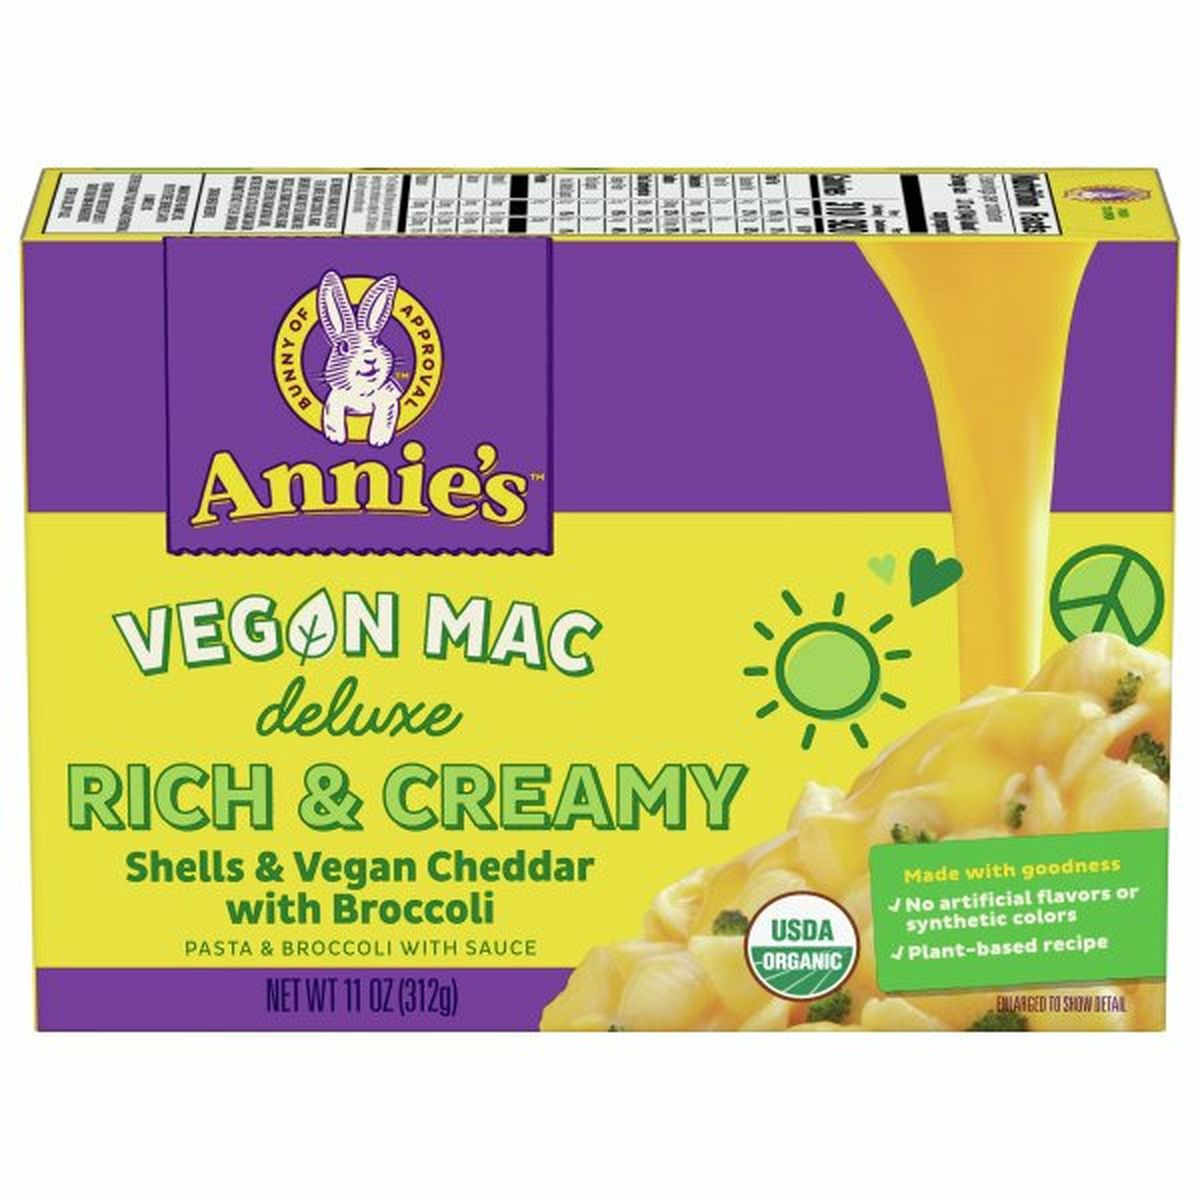 Calories in Annie's Pasta & Broccoli with Sauce, Vegan Mac, Rich & Creamy, Deluxe